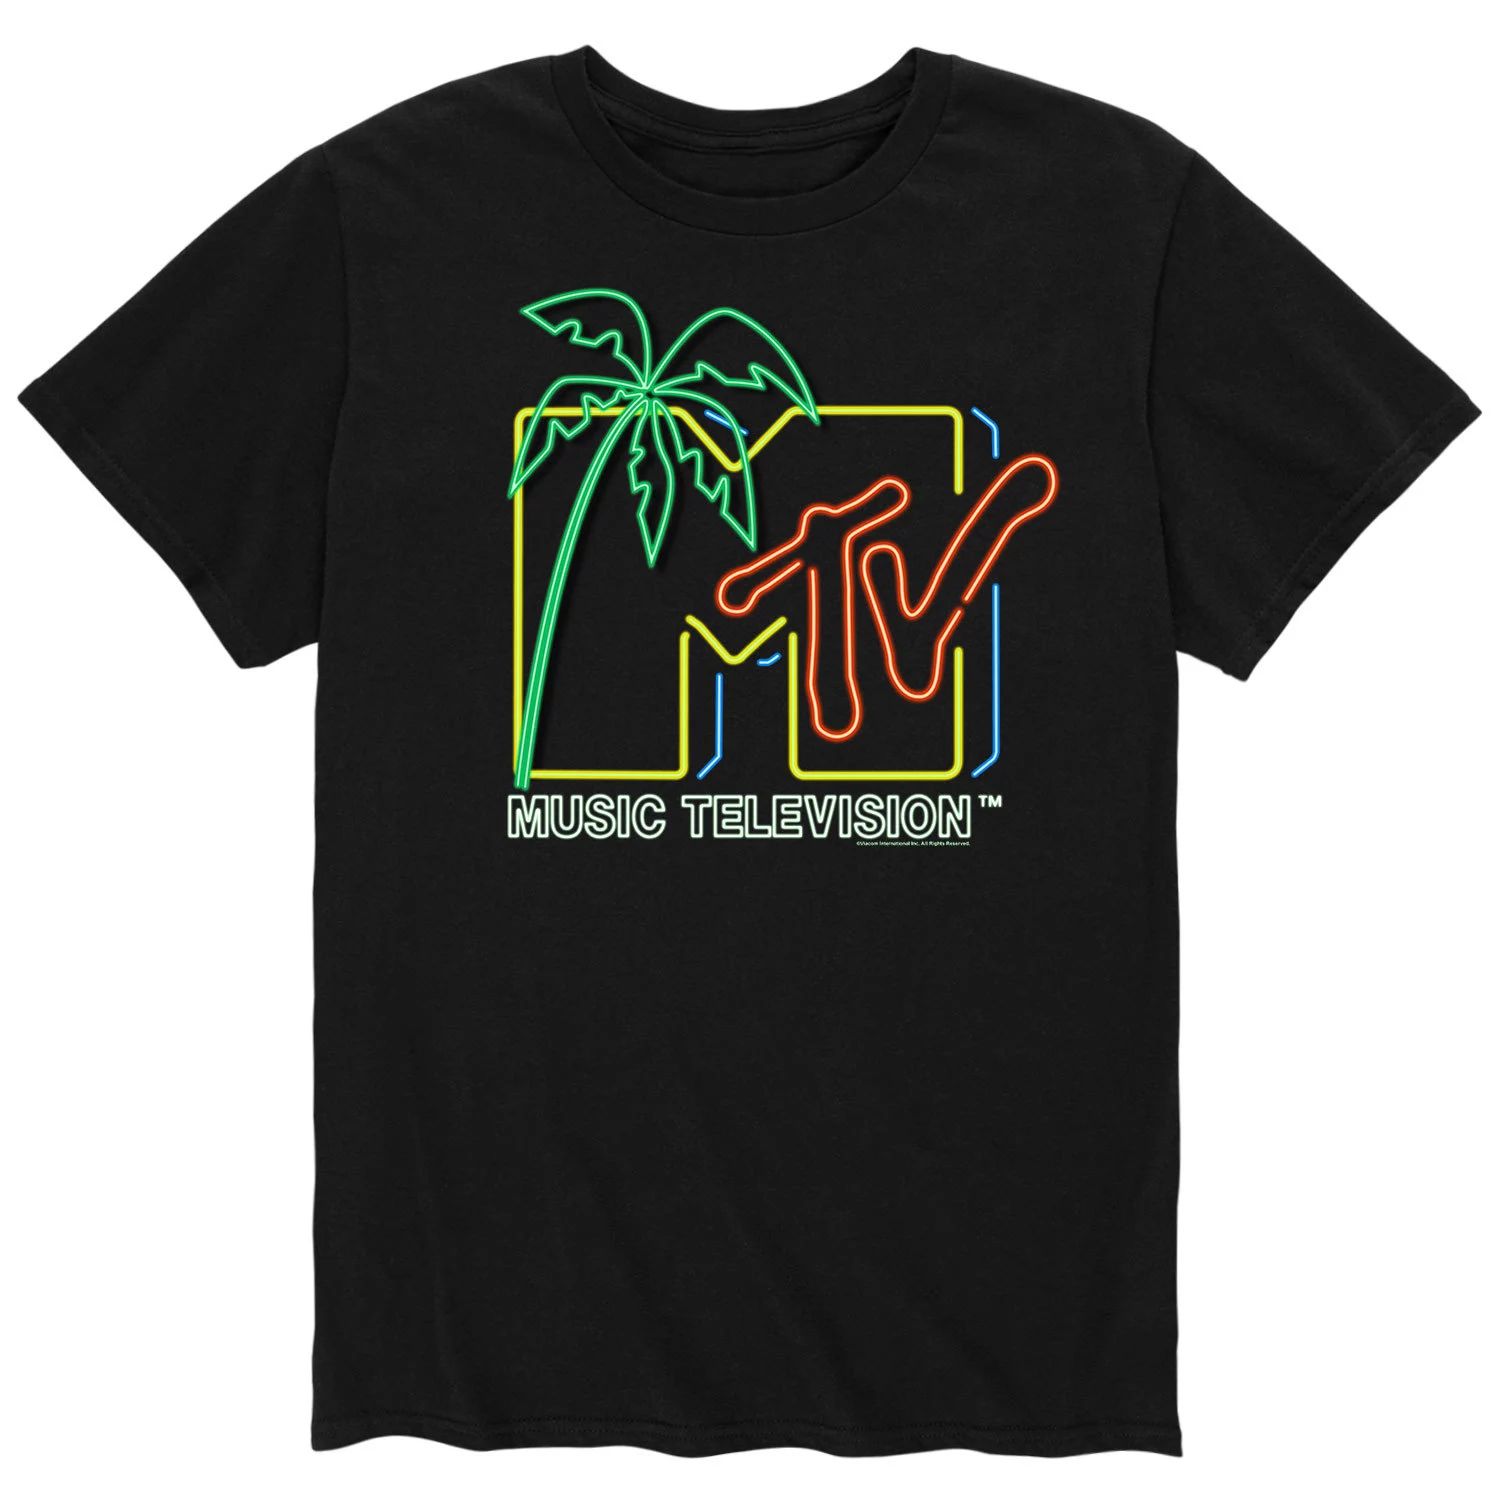 Мужская футболка MTV с неоновым светом Licensed Character мужская футболка death before decaf с неоновым скелетом licensed character